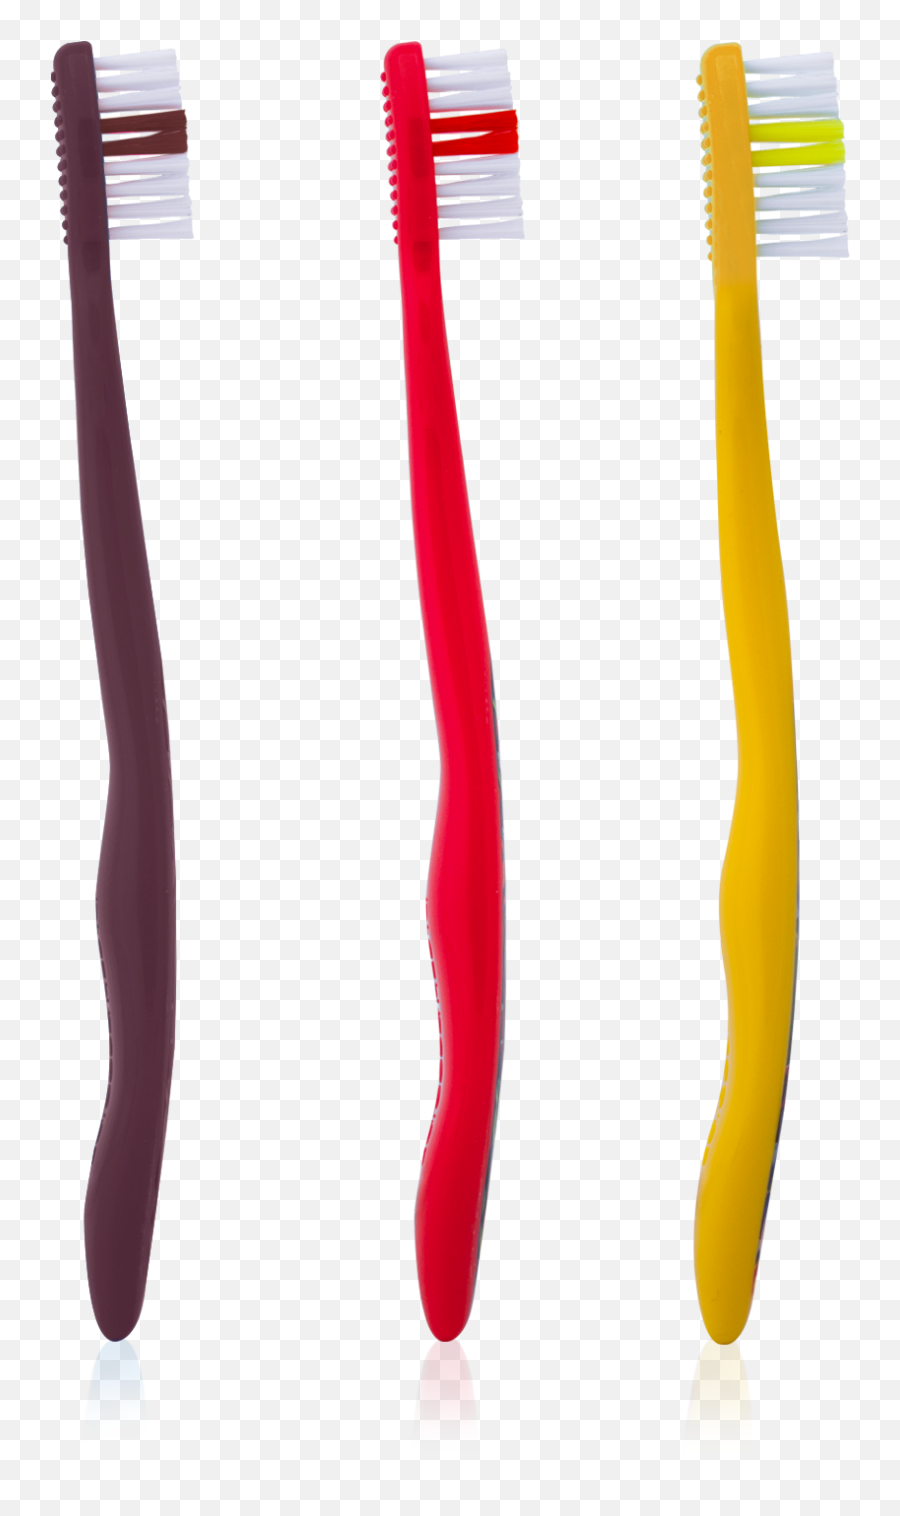 Emoji Toothbrush 3 Pack U2013 Brush Buddies - Toothbrush,Socks With Emojis On Them For Kids